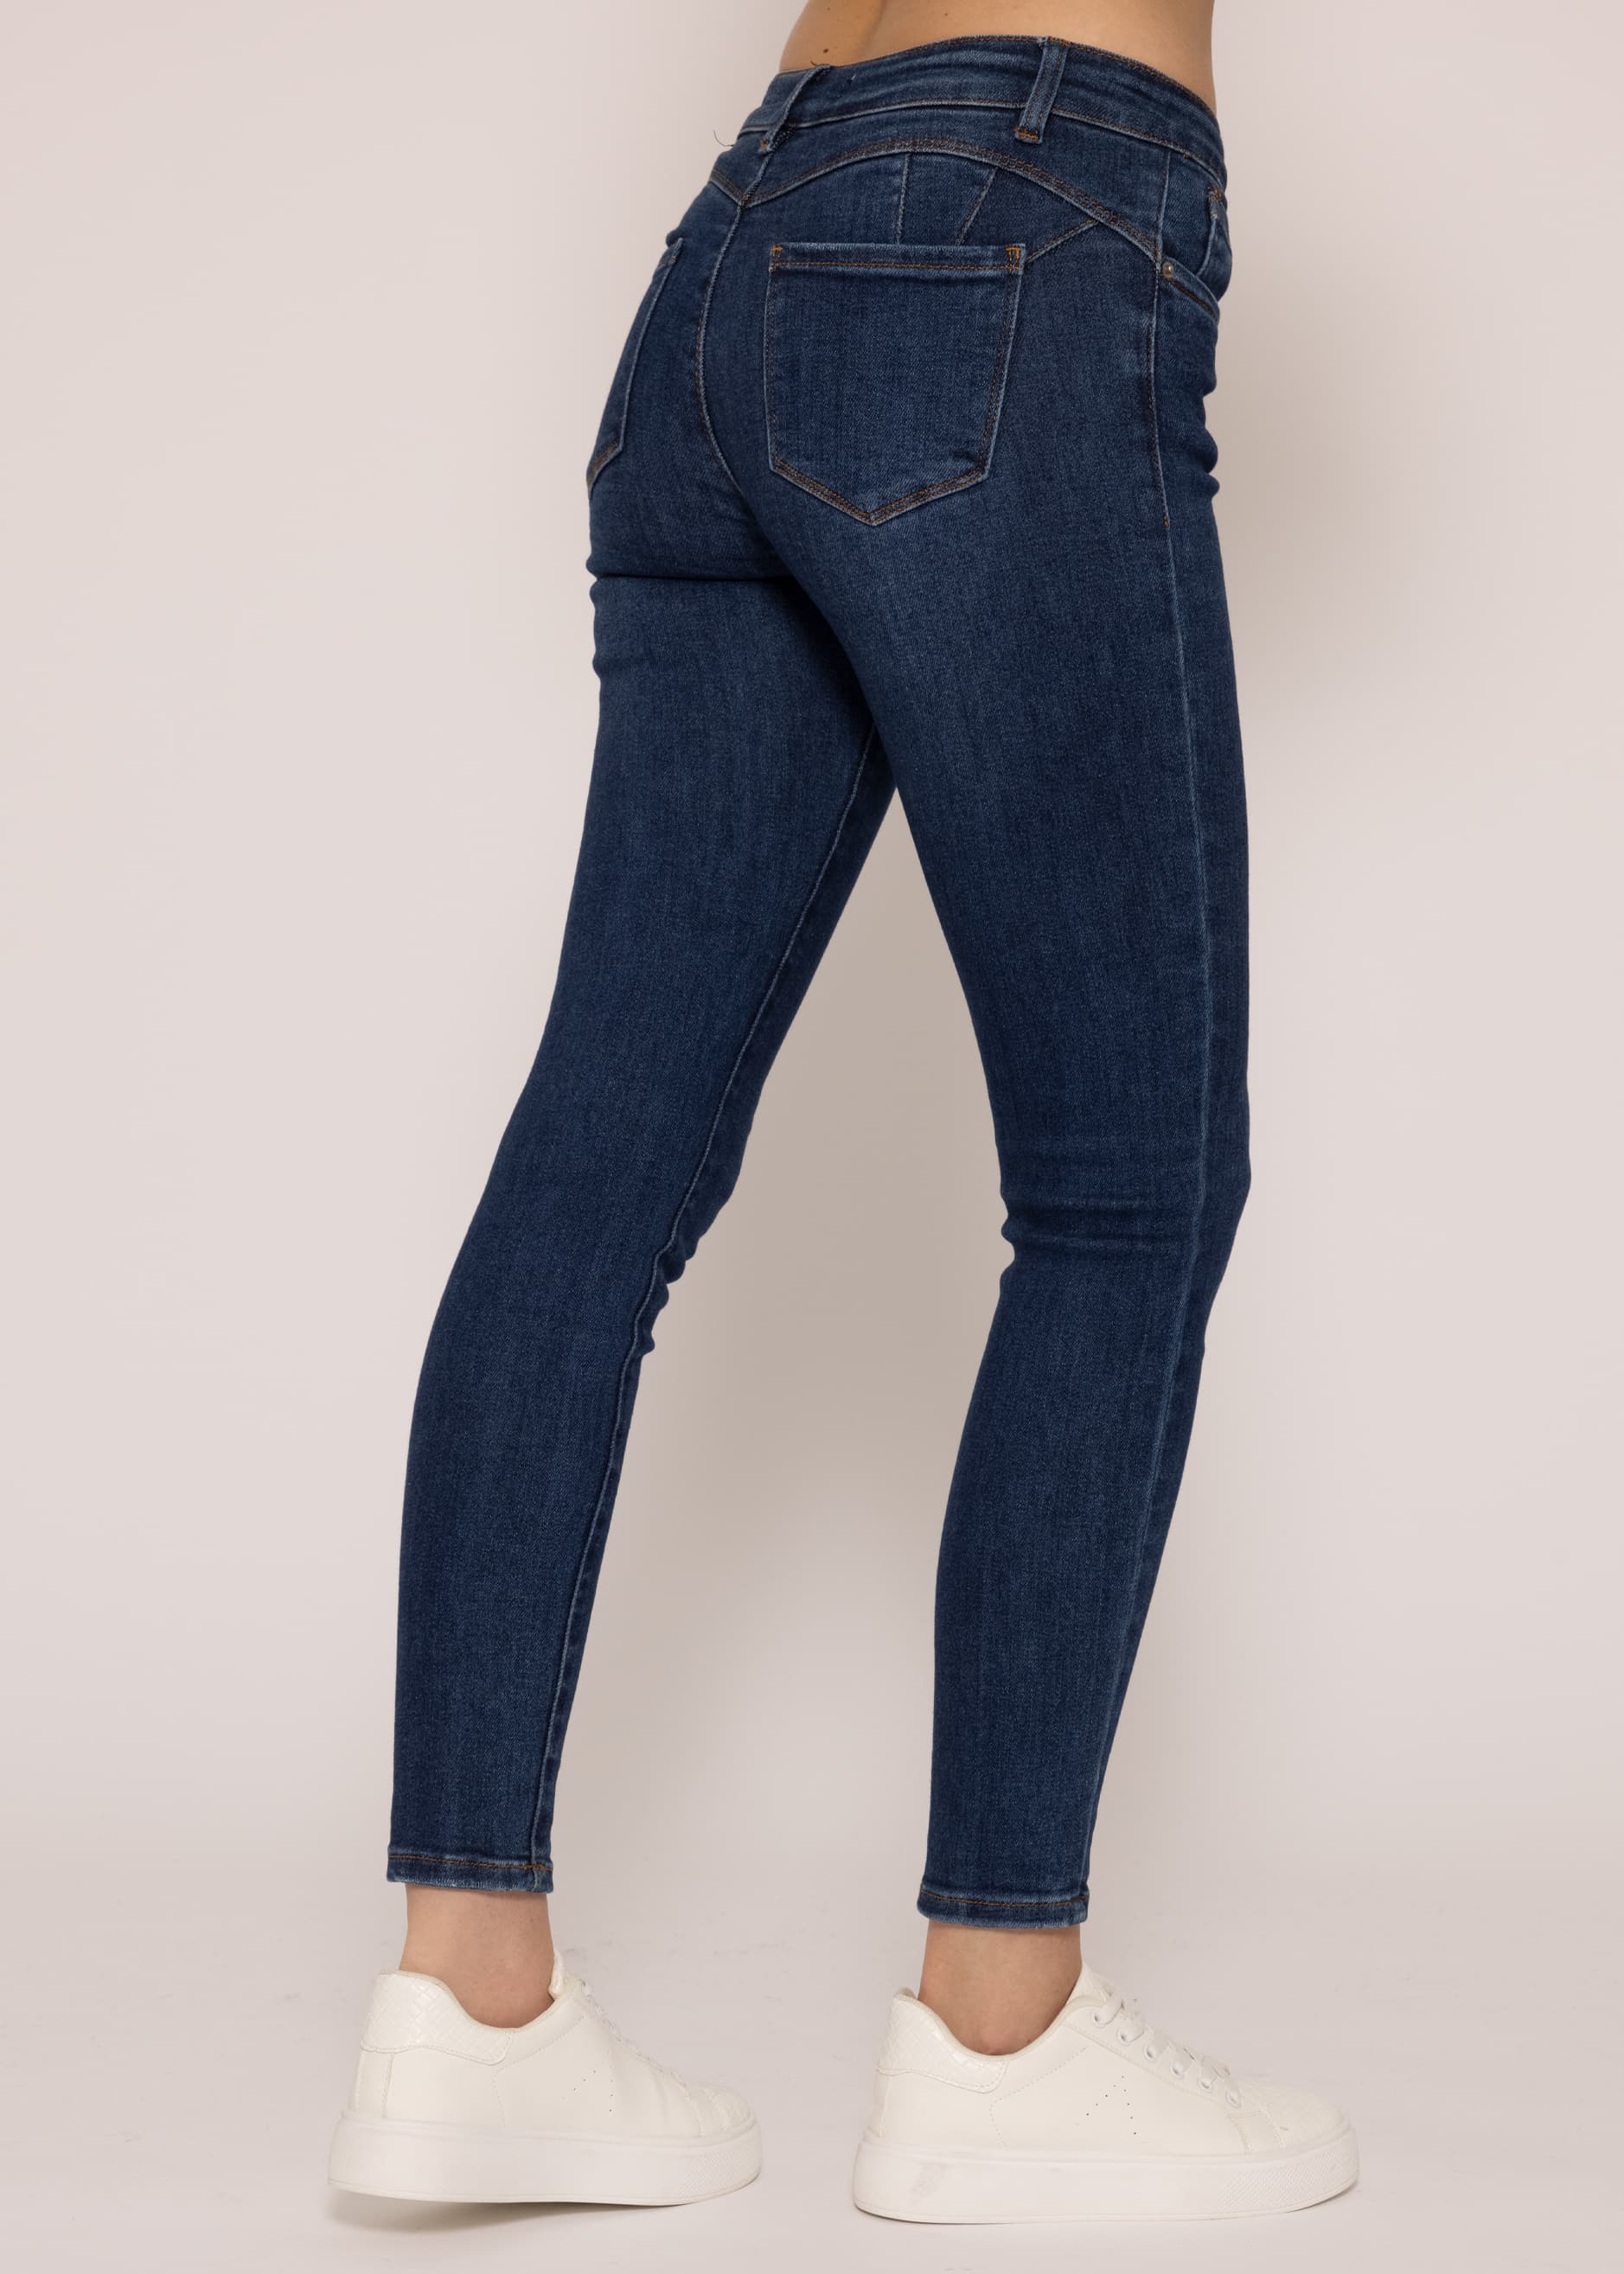 Highwaist push-up jeans, dark blue | Jeans | SassyClassy.com